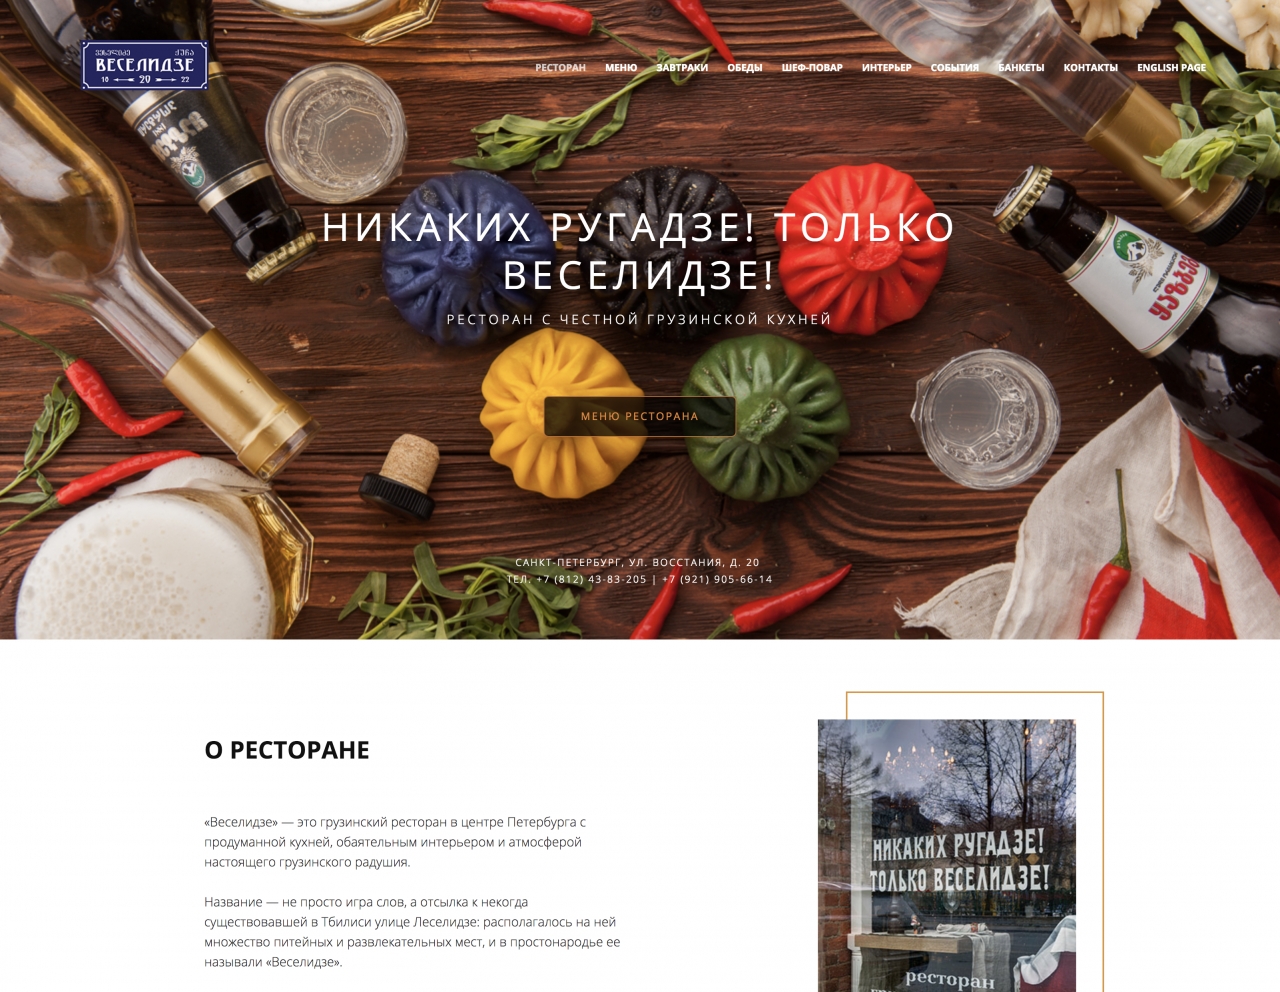 Georgian cuisine restaurant website